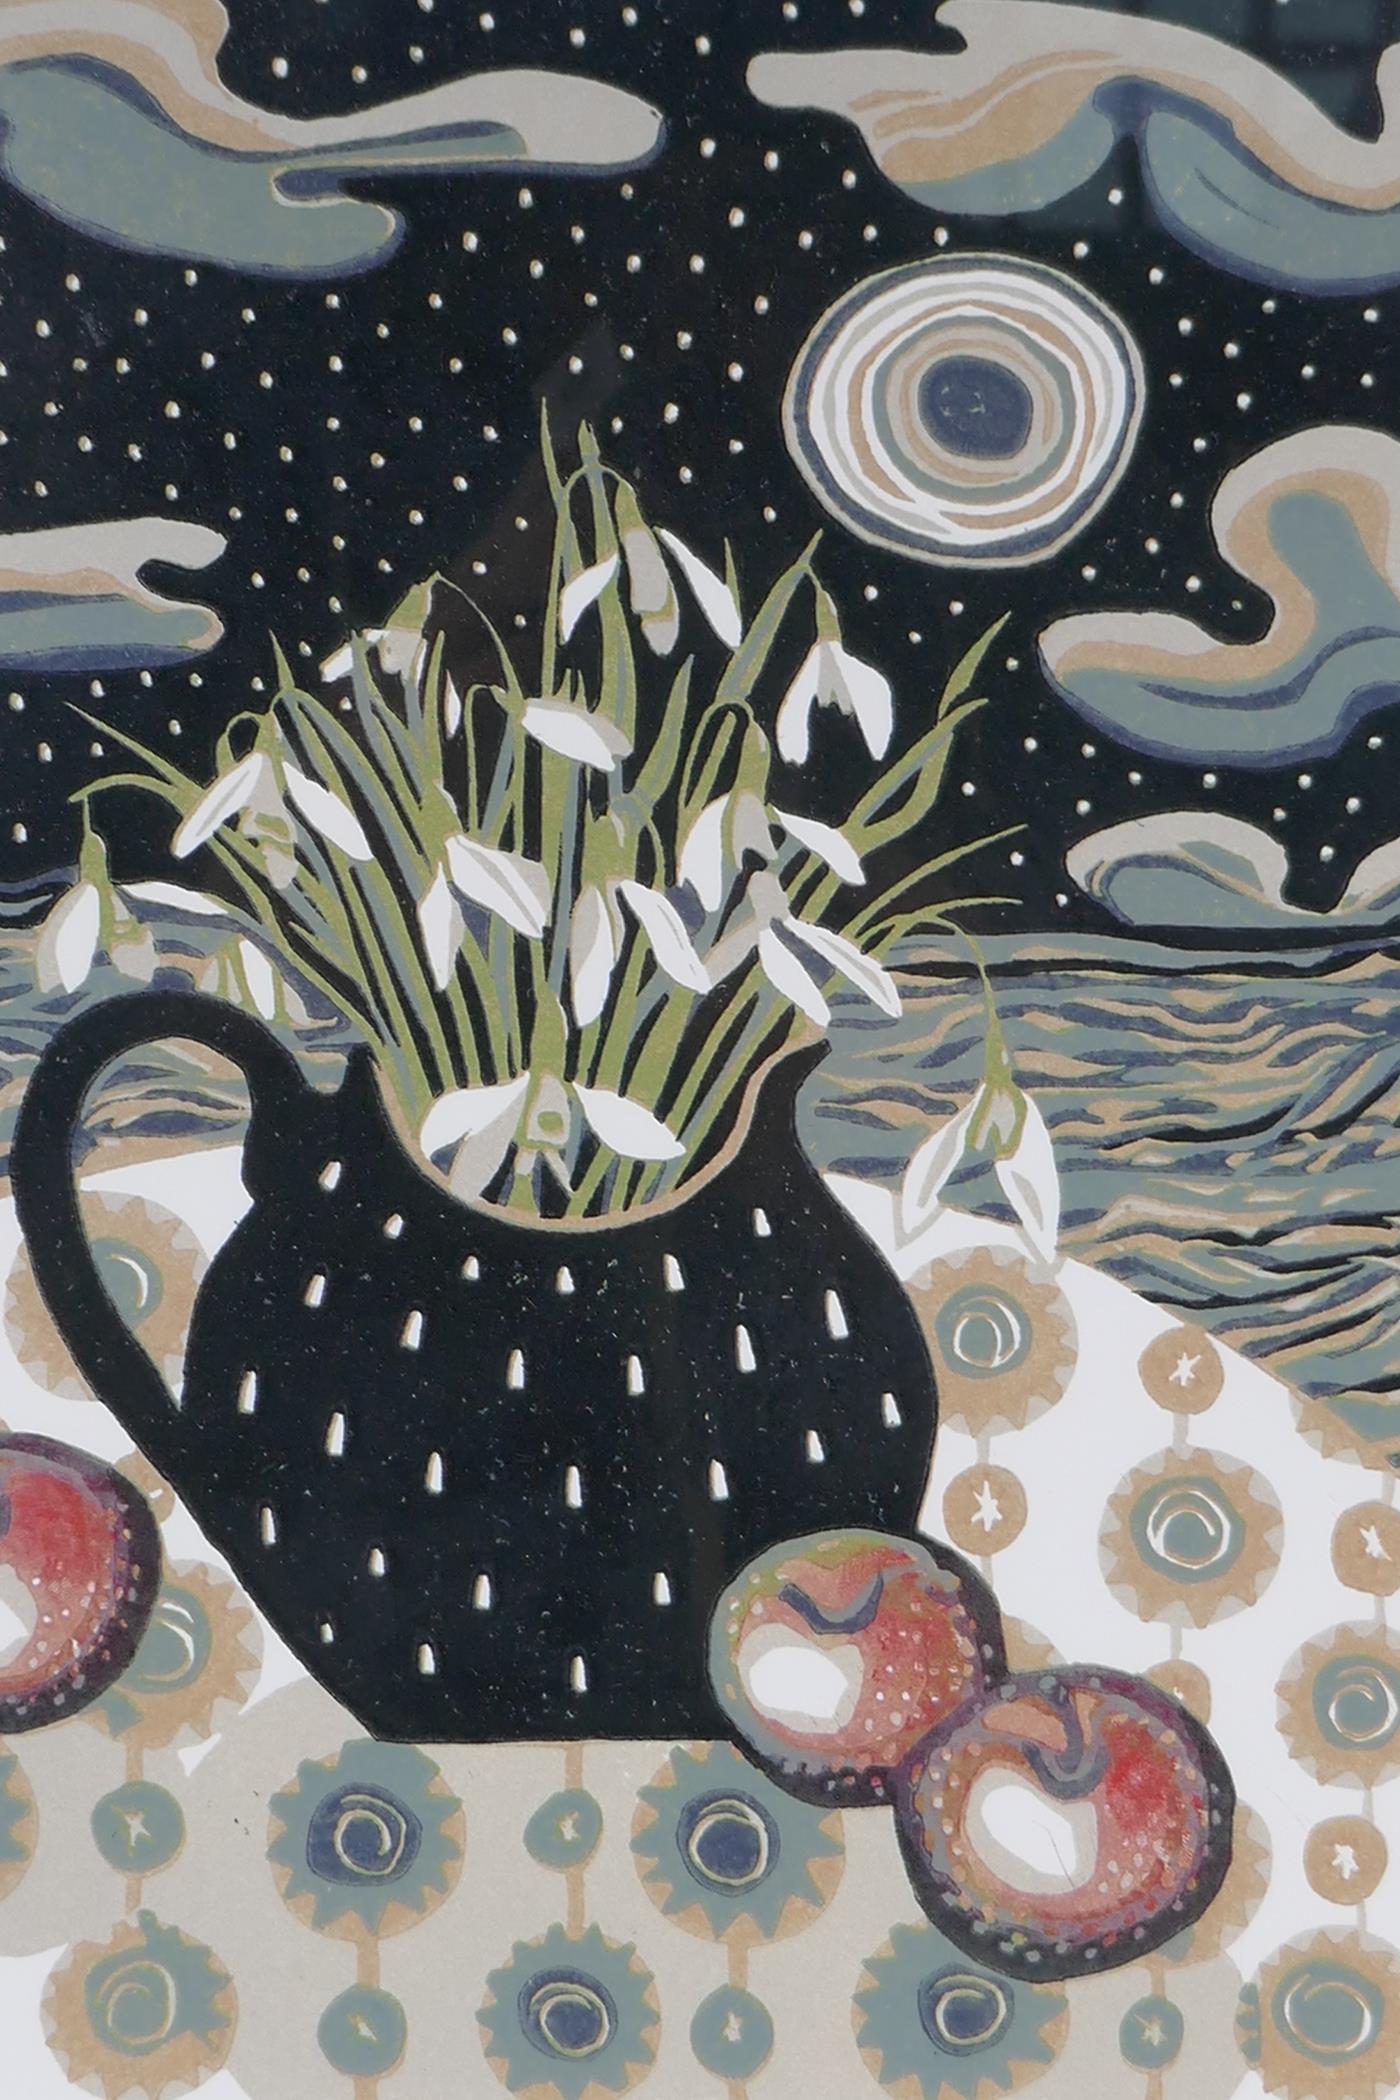 Jane Walker, Scottish, Snow & Apples, limited edition lino cut still life print, 4/16, pencil signed